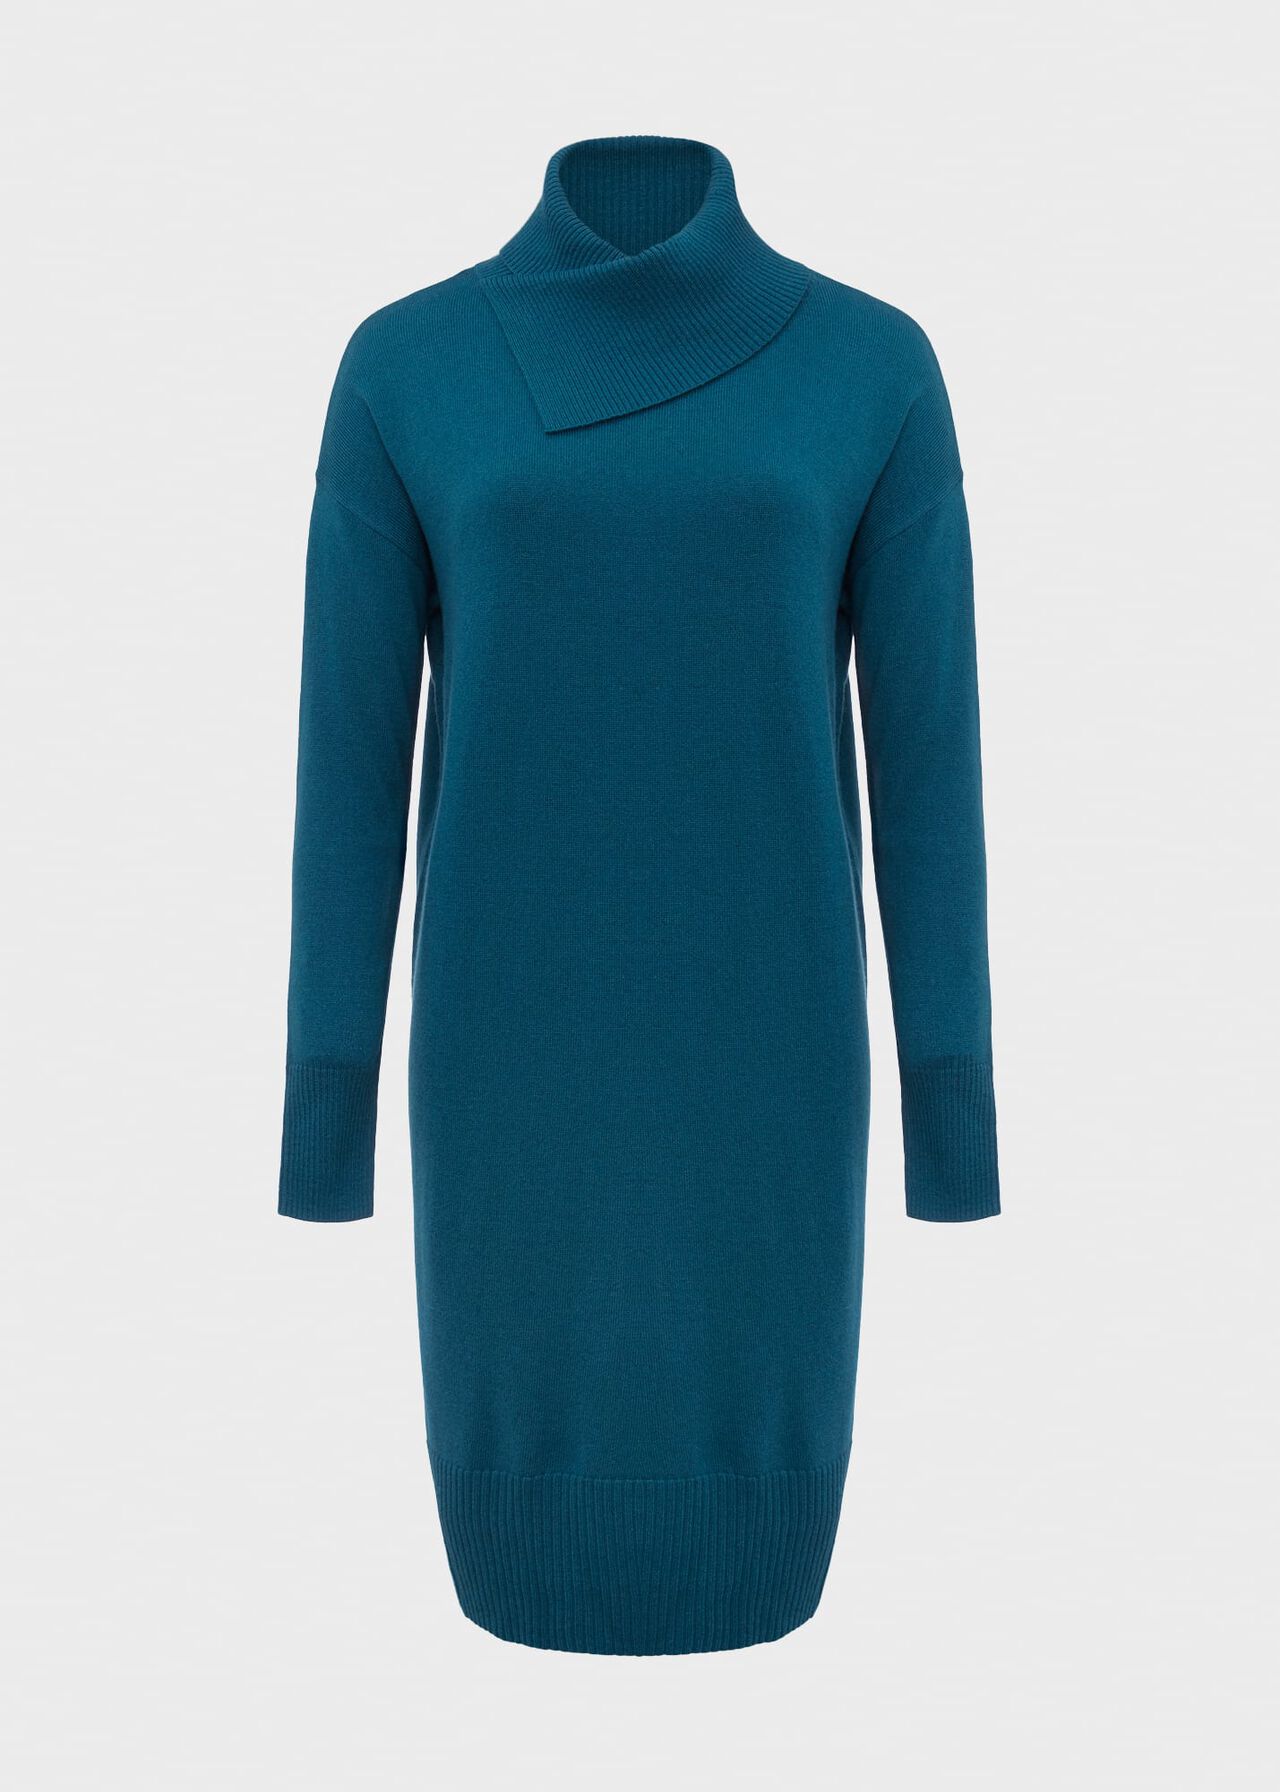 Courtney Knit Dress, Aegean Blue, hi-res